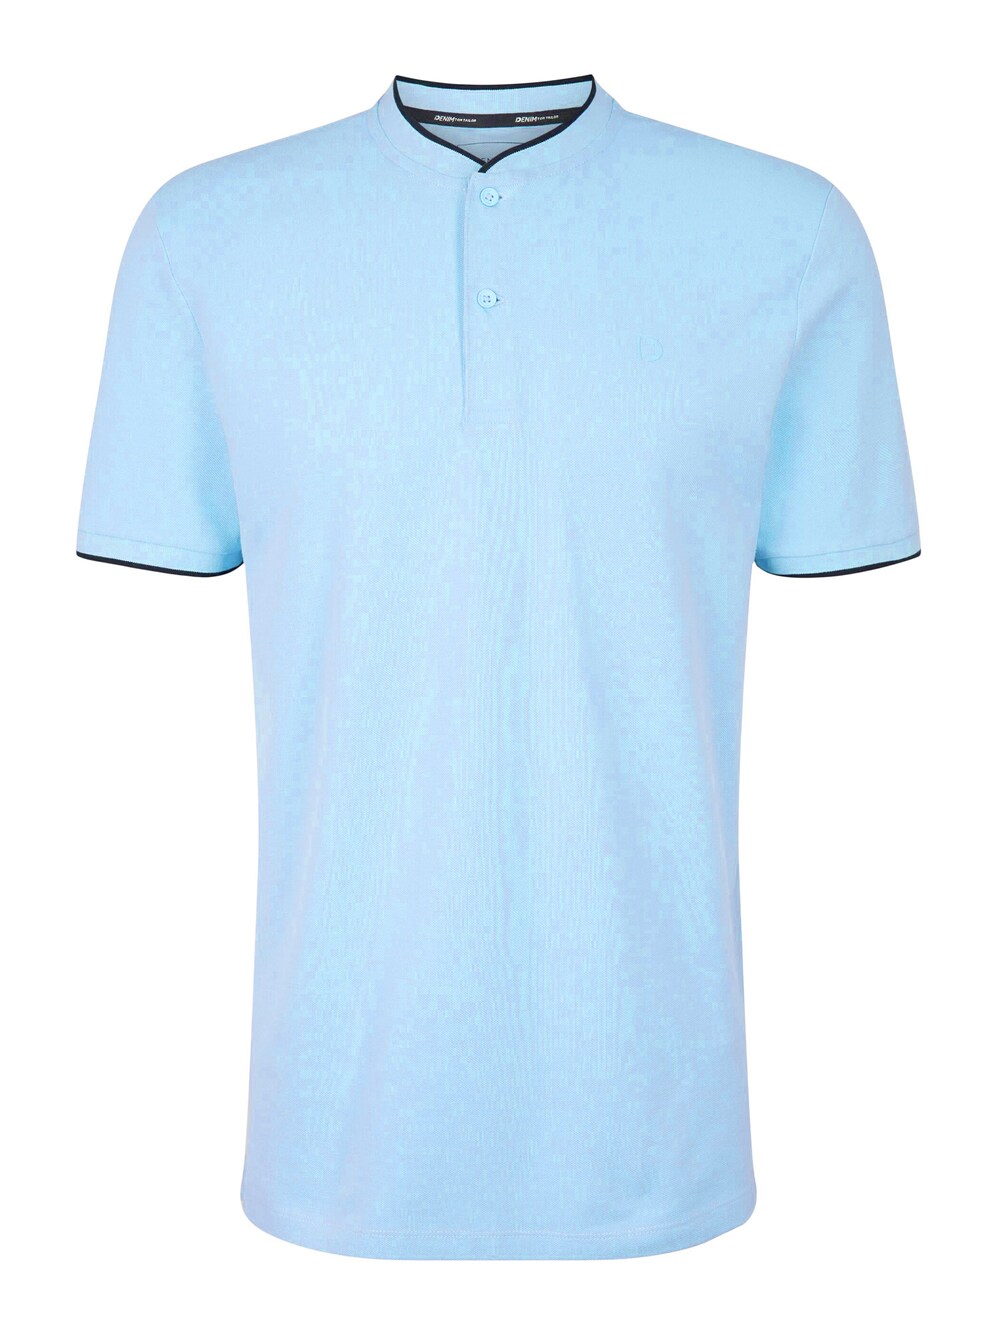 Футболка TOM TAILOR DENIM, темно-синий/светло-голубой футболка tom tailor размер l белый голубой